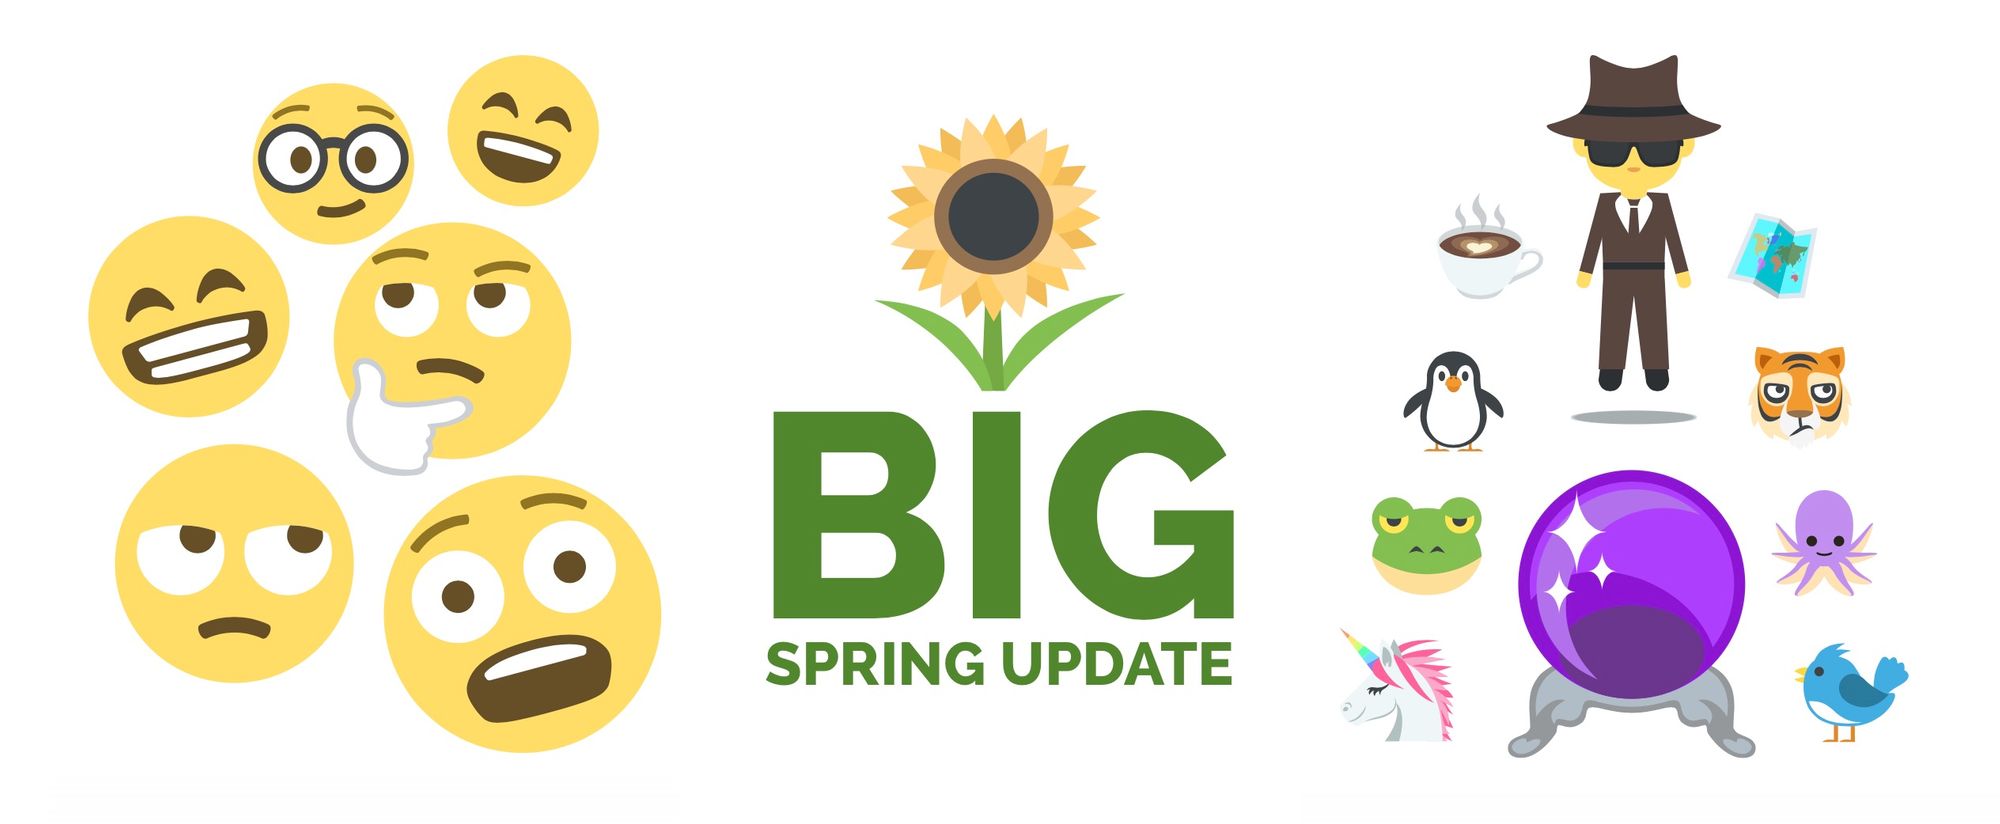 Emoji One Releases Big Spring Update